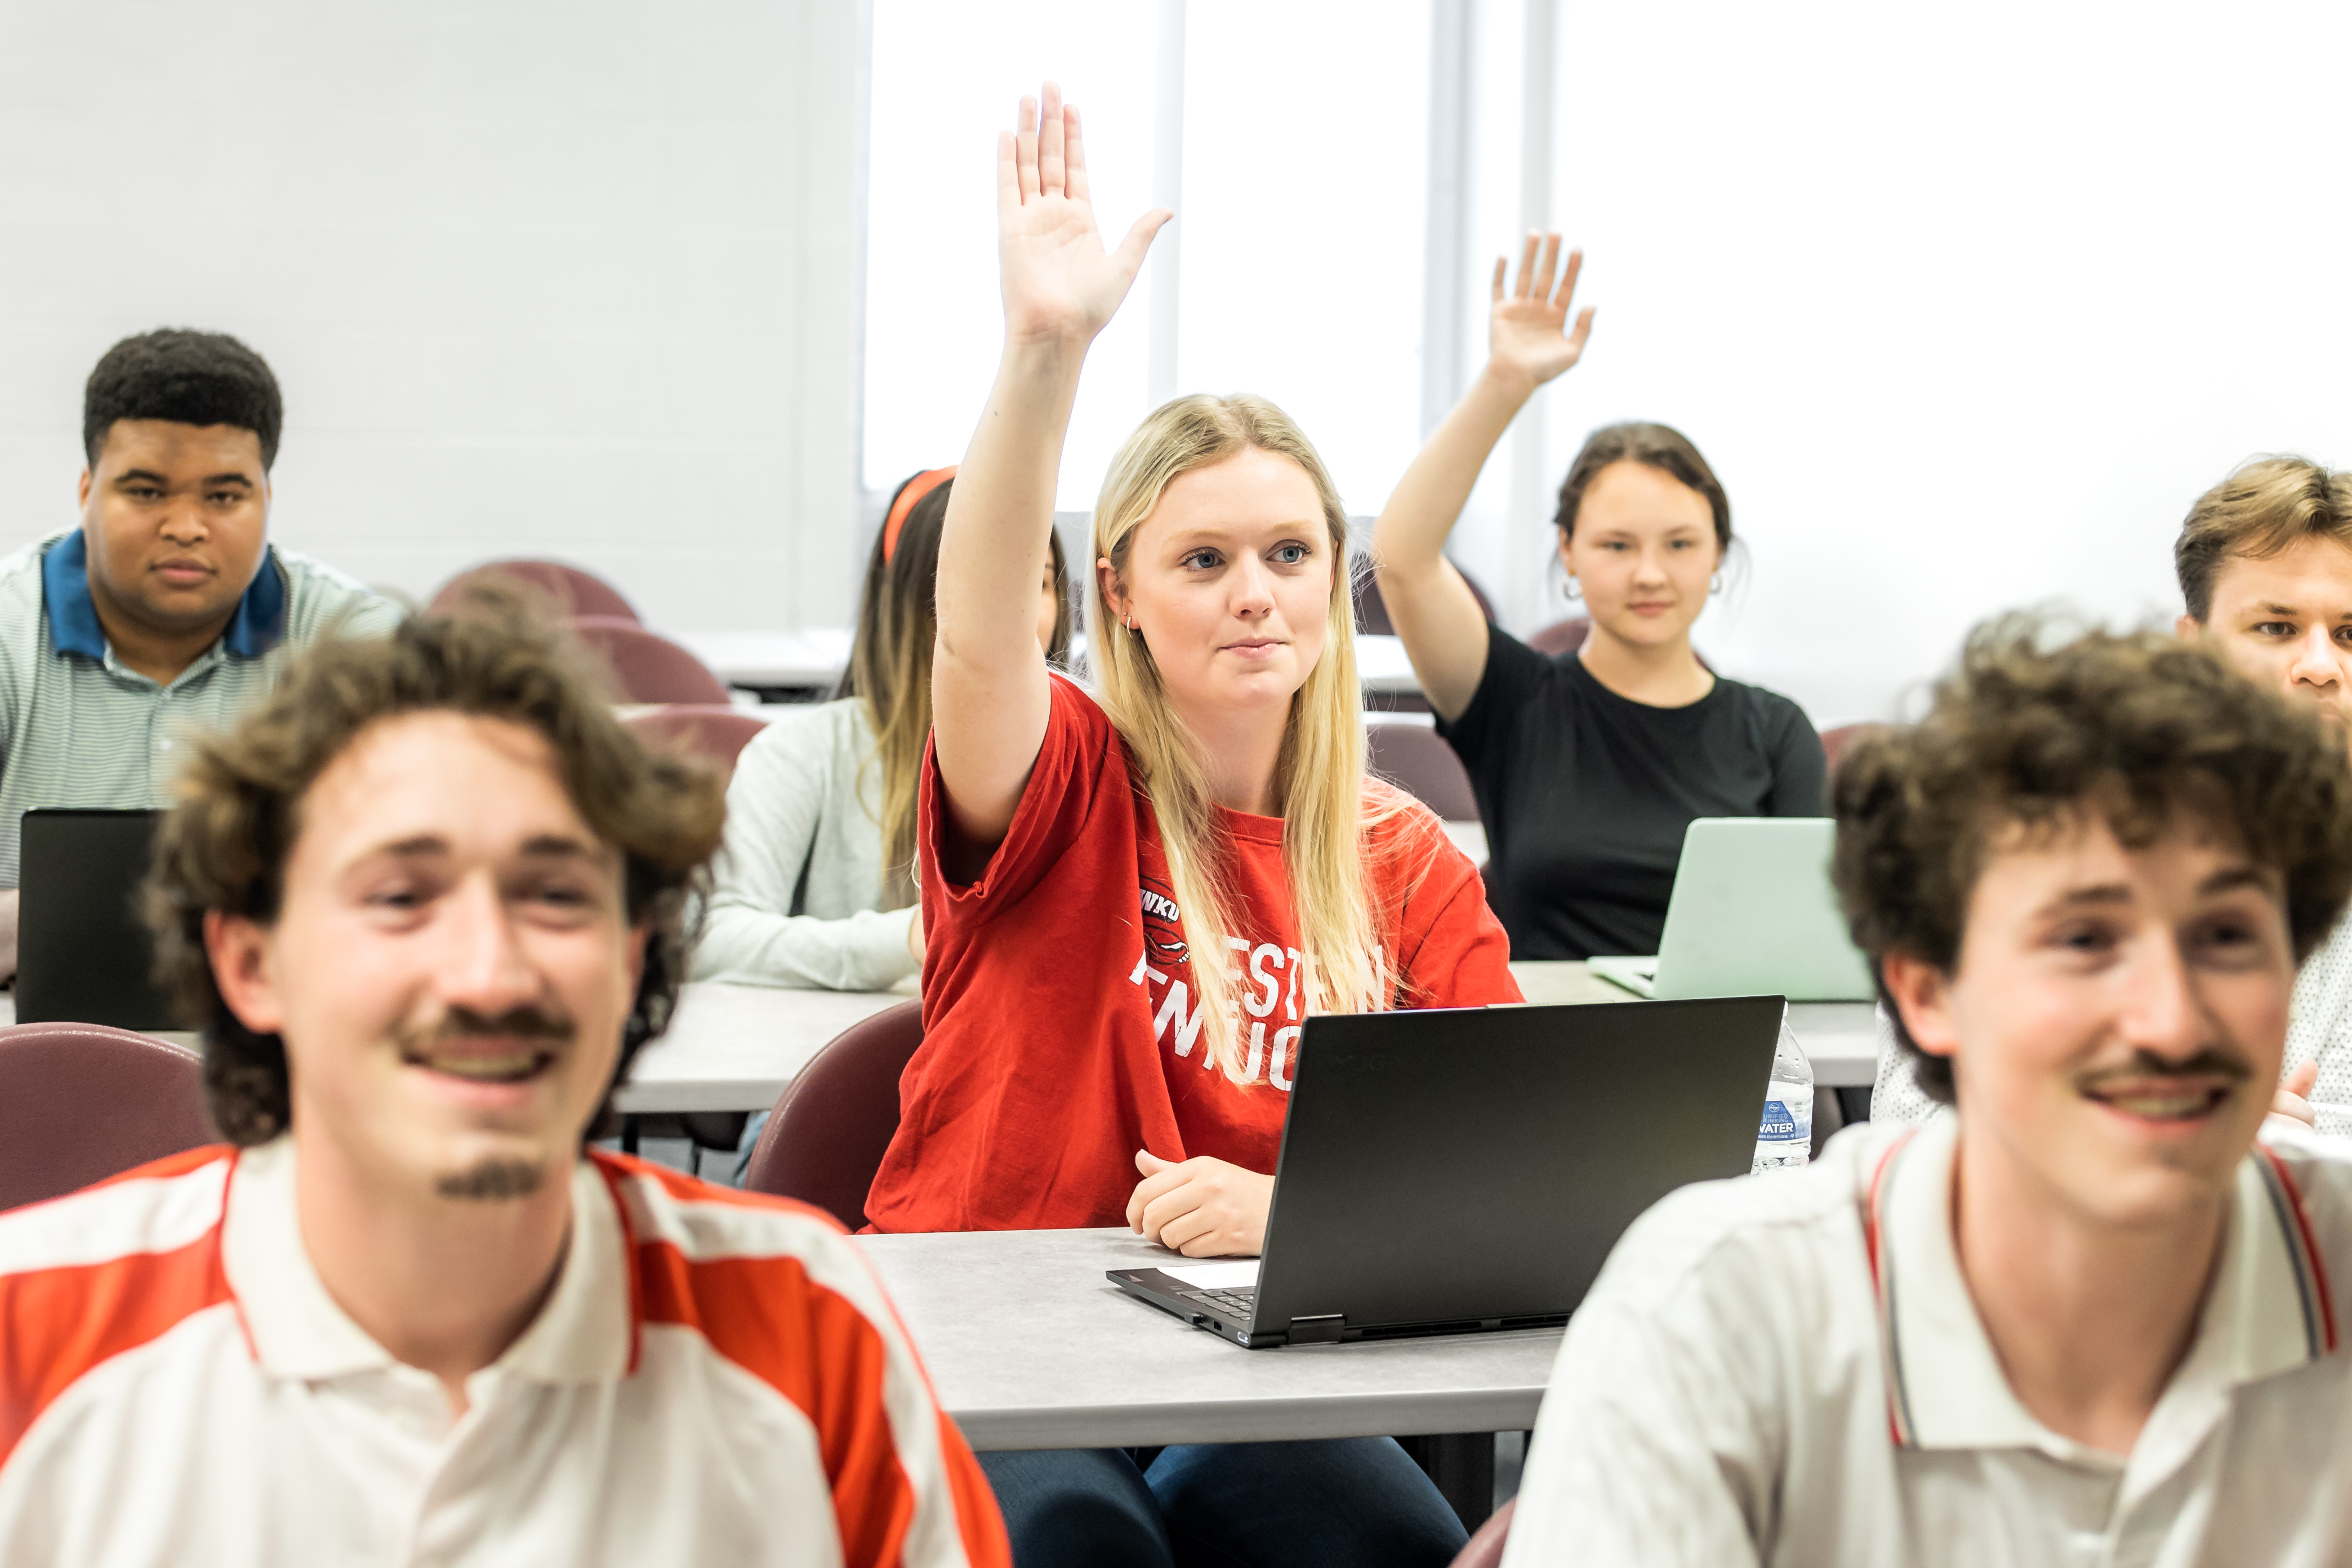 Student raises hand in class.